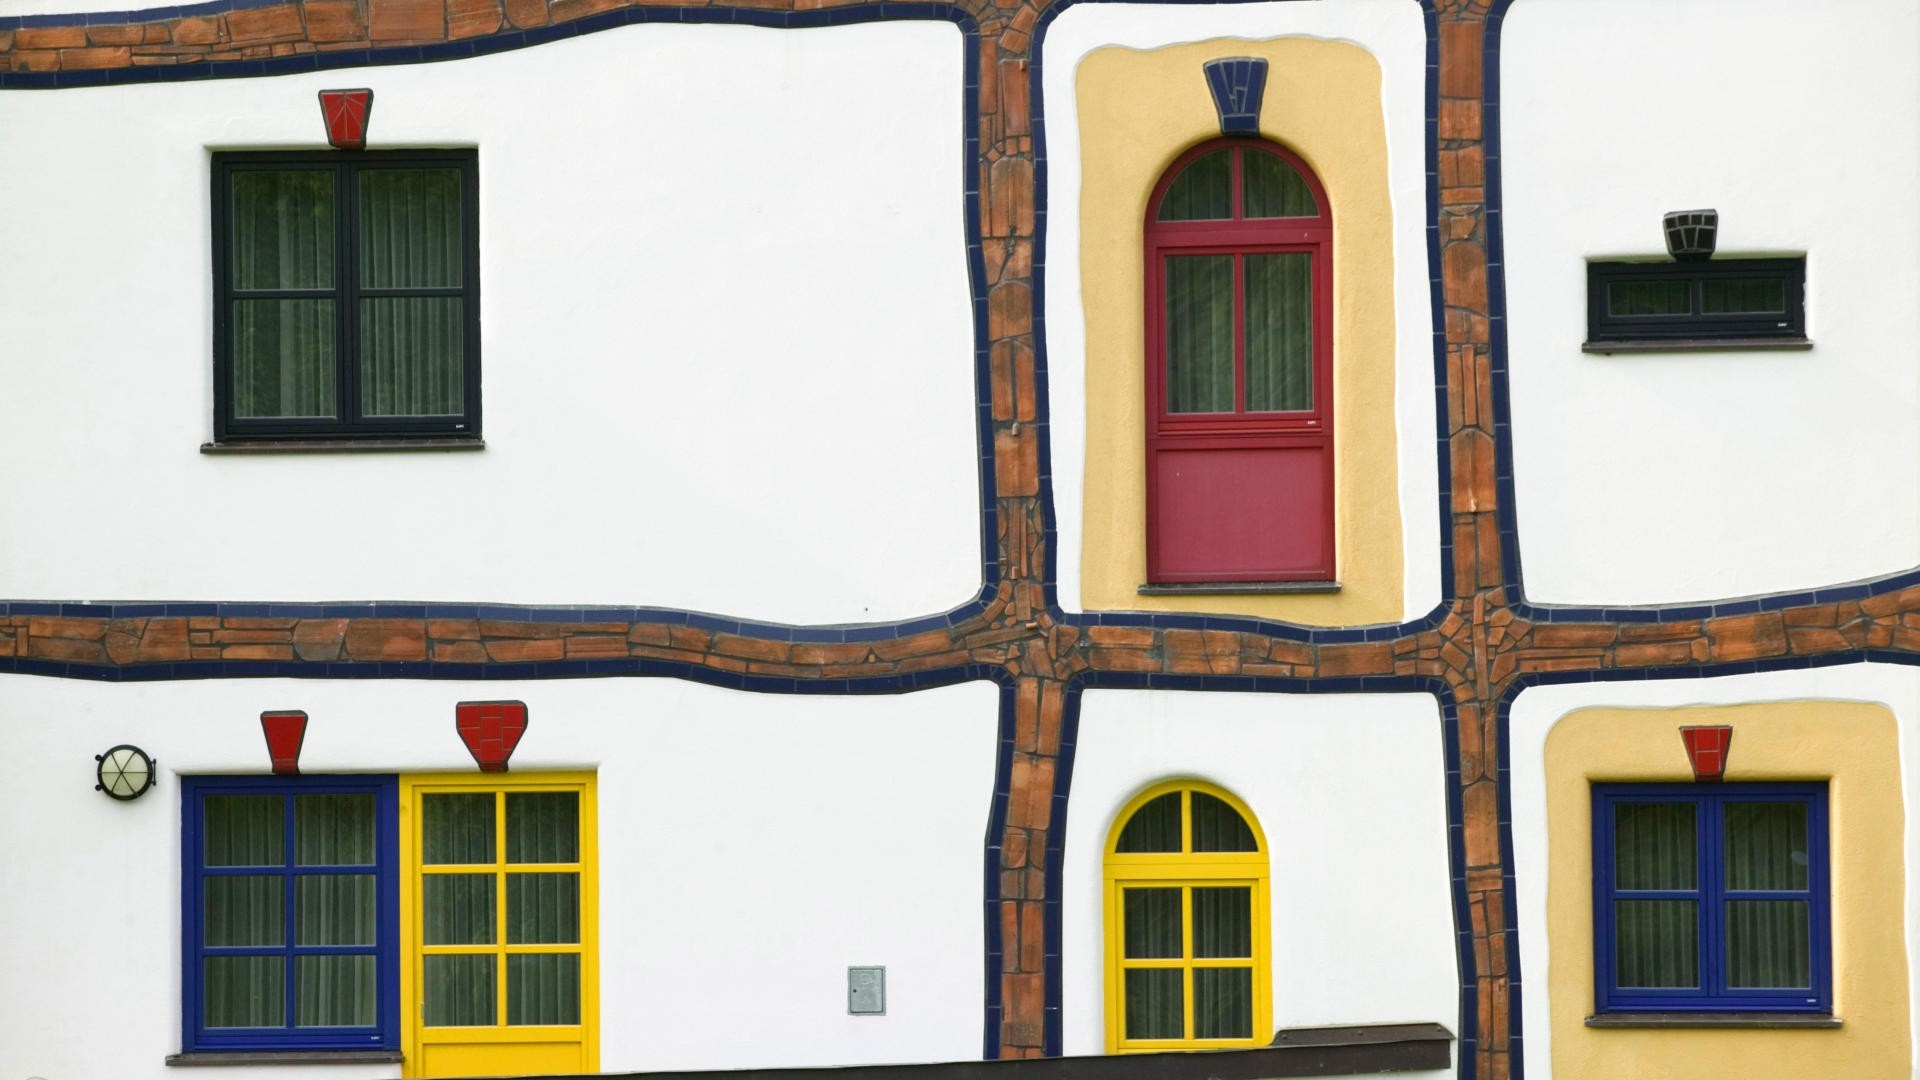 General 1920x1080 Austria architecture colorful house facade window Rogner Bad Blumau Styria (city in Austria) Steiermark